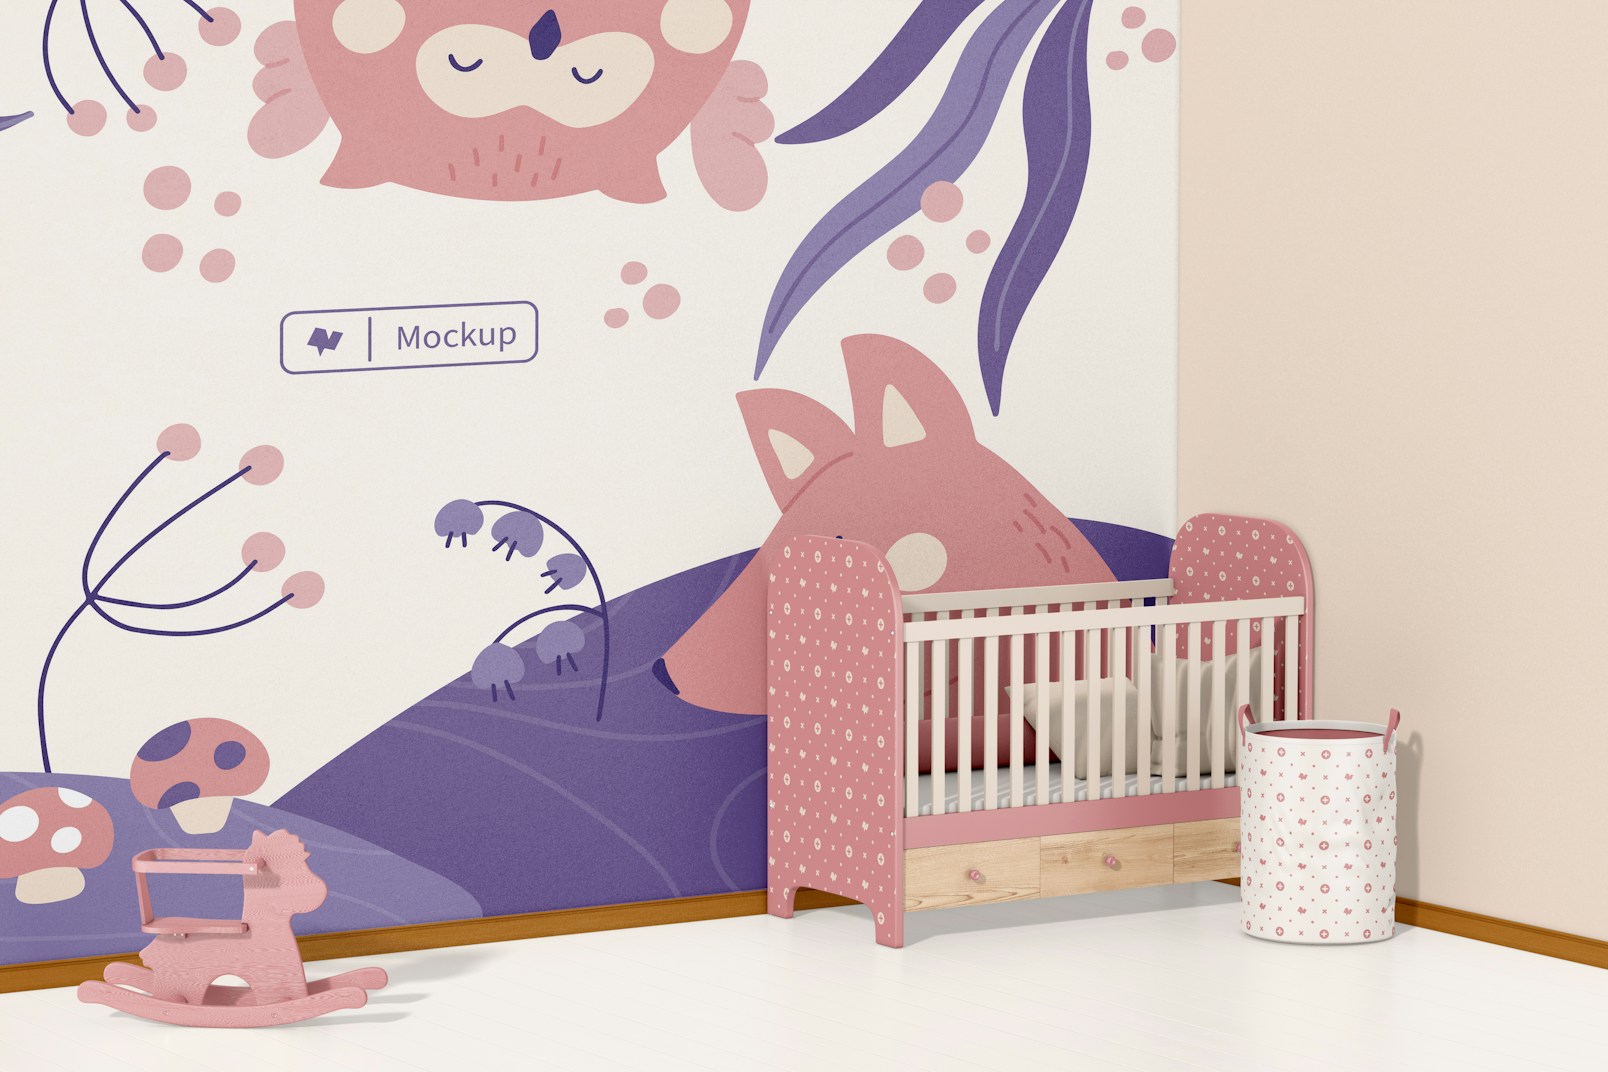 Baby Room Wall with Crib Mockup